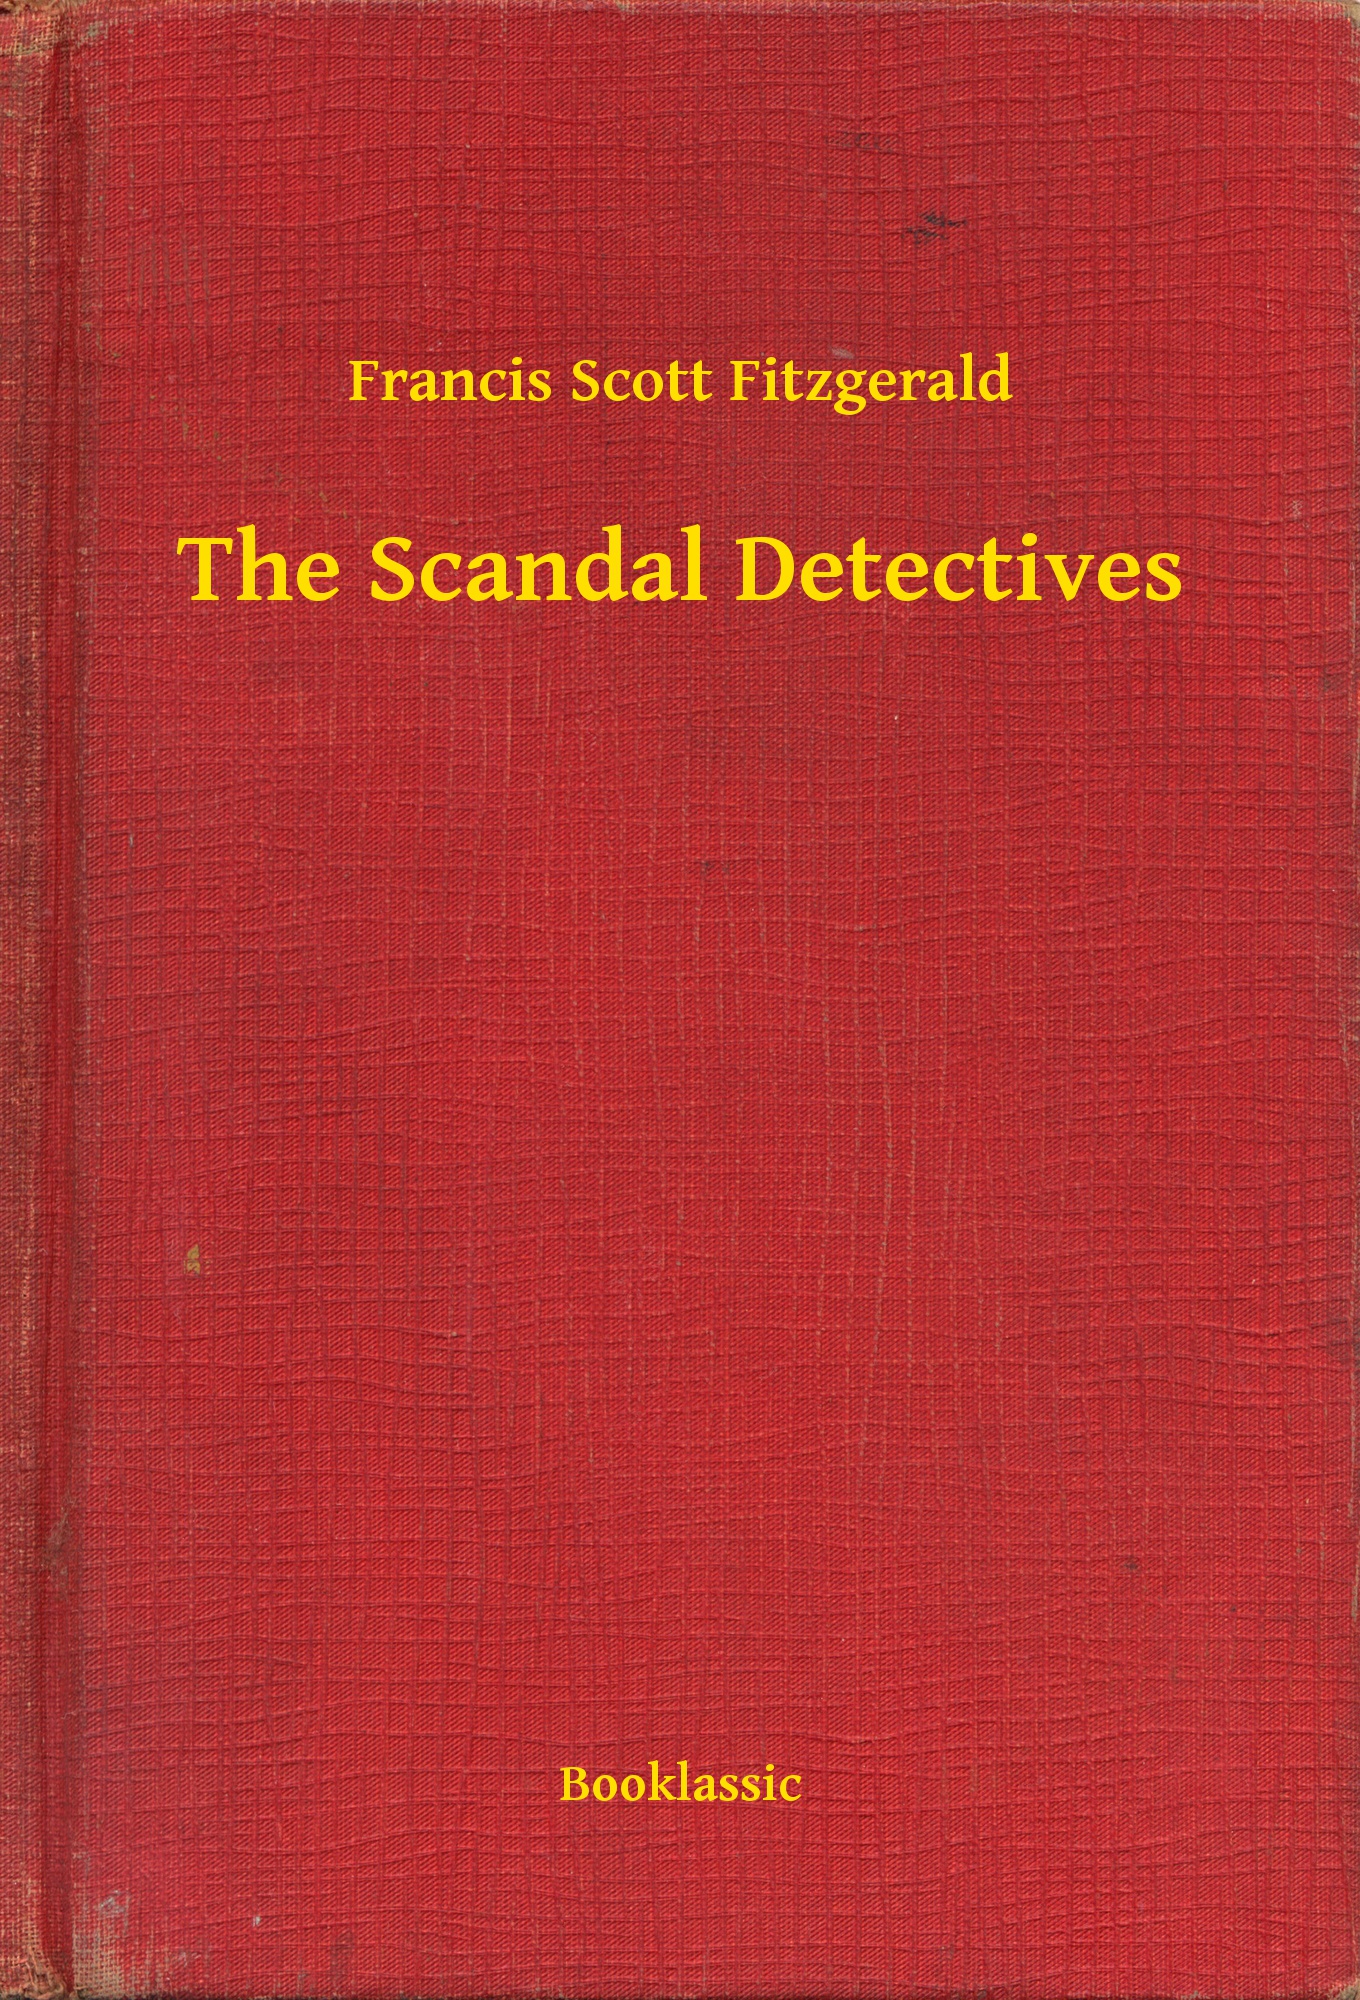 The Scandal Detectives